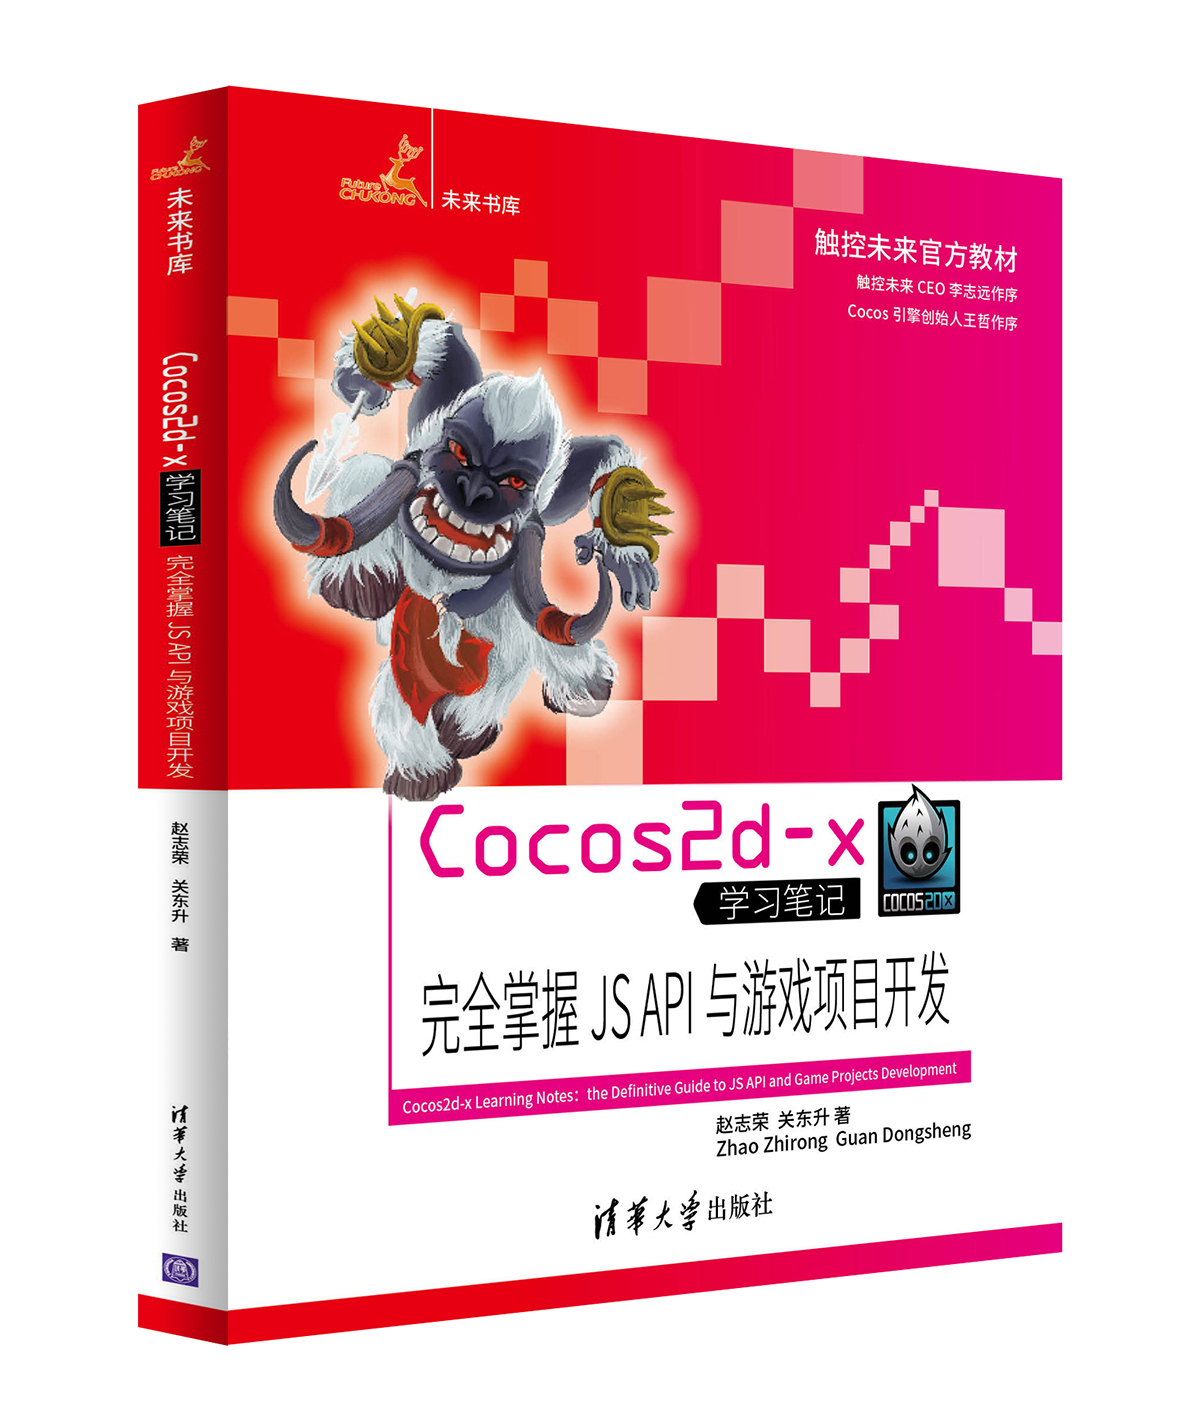 Cocos2d-x完全掌握 JS API與遊戲項目開發